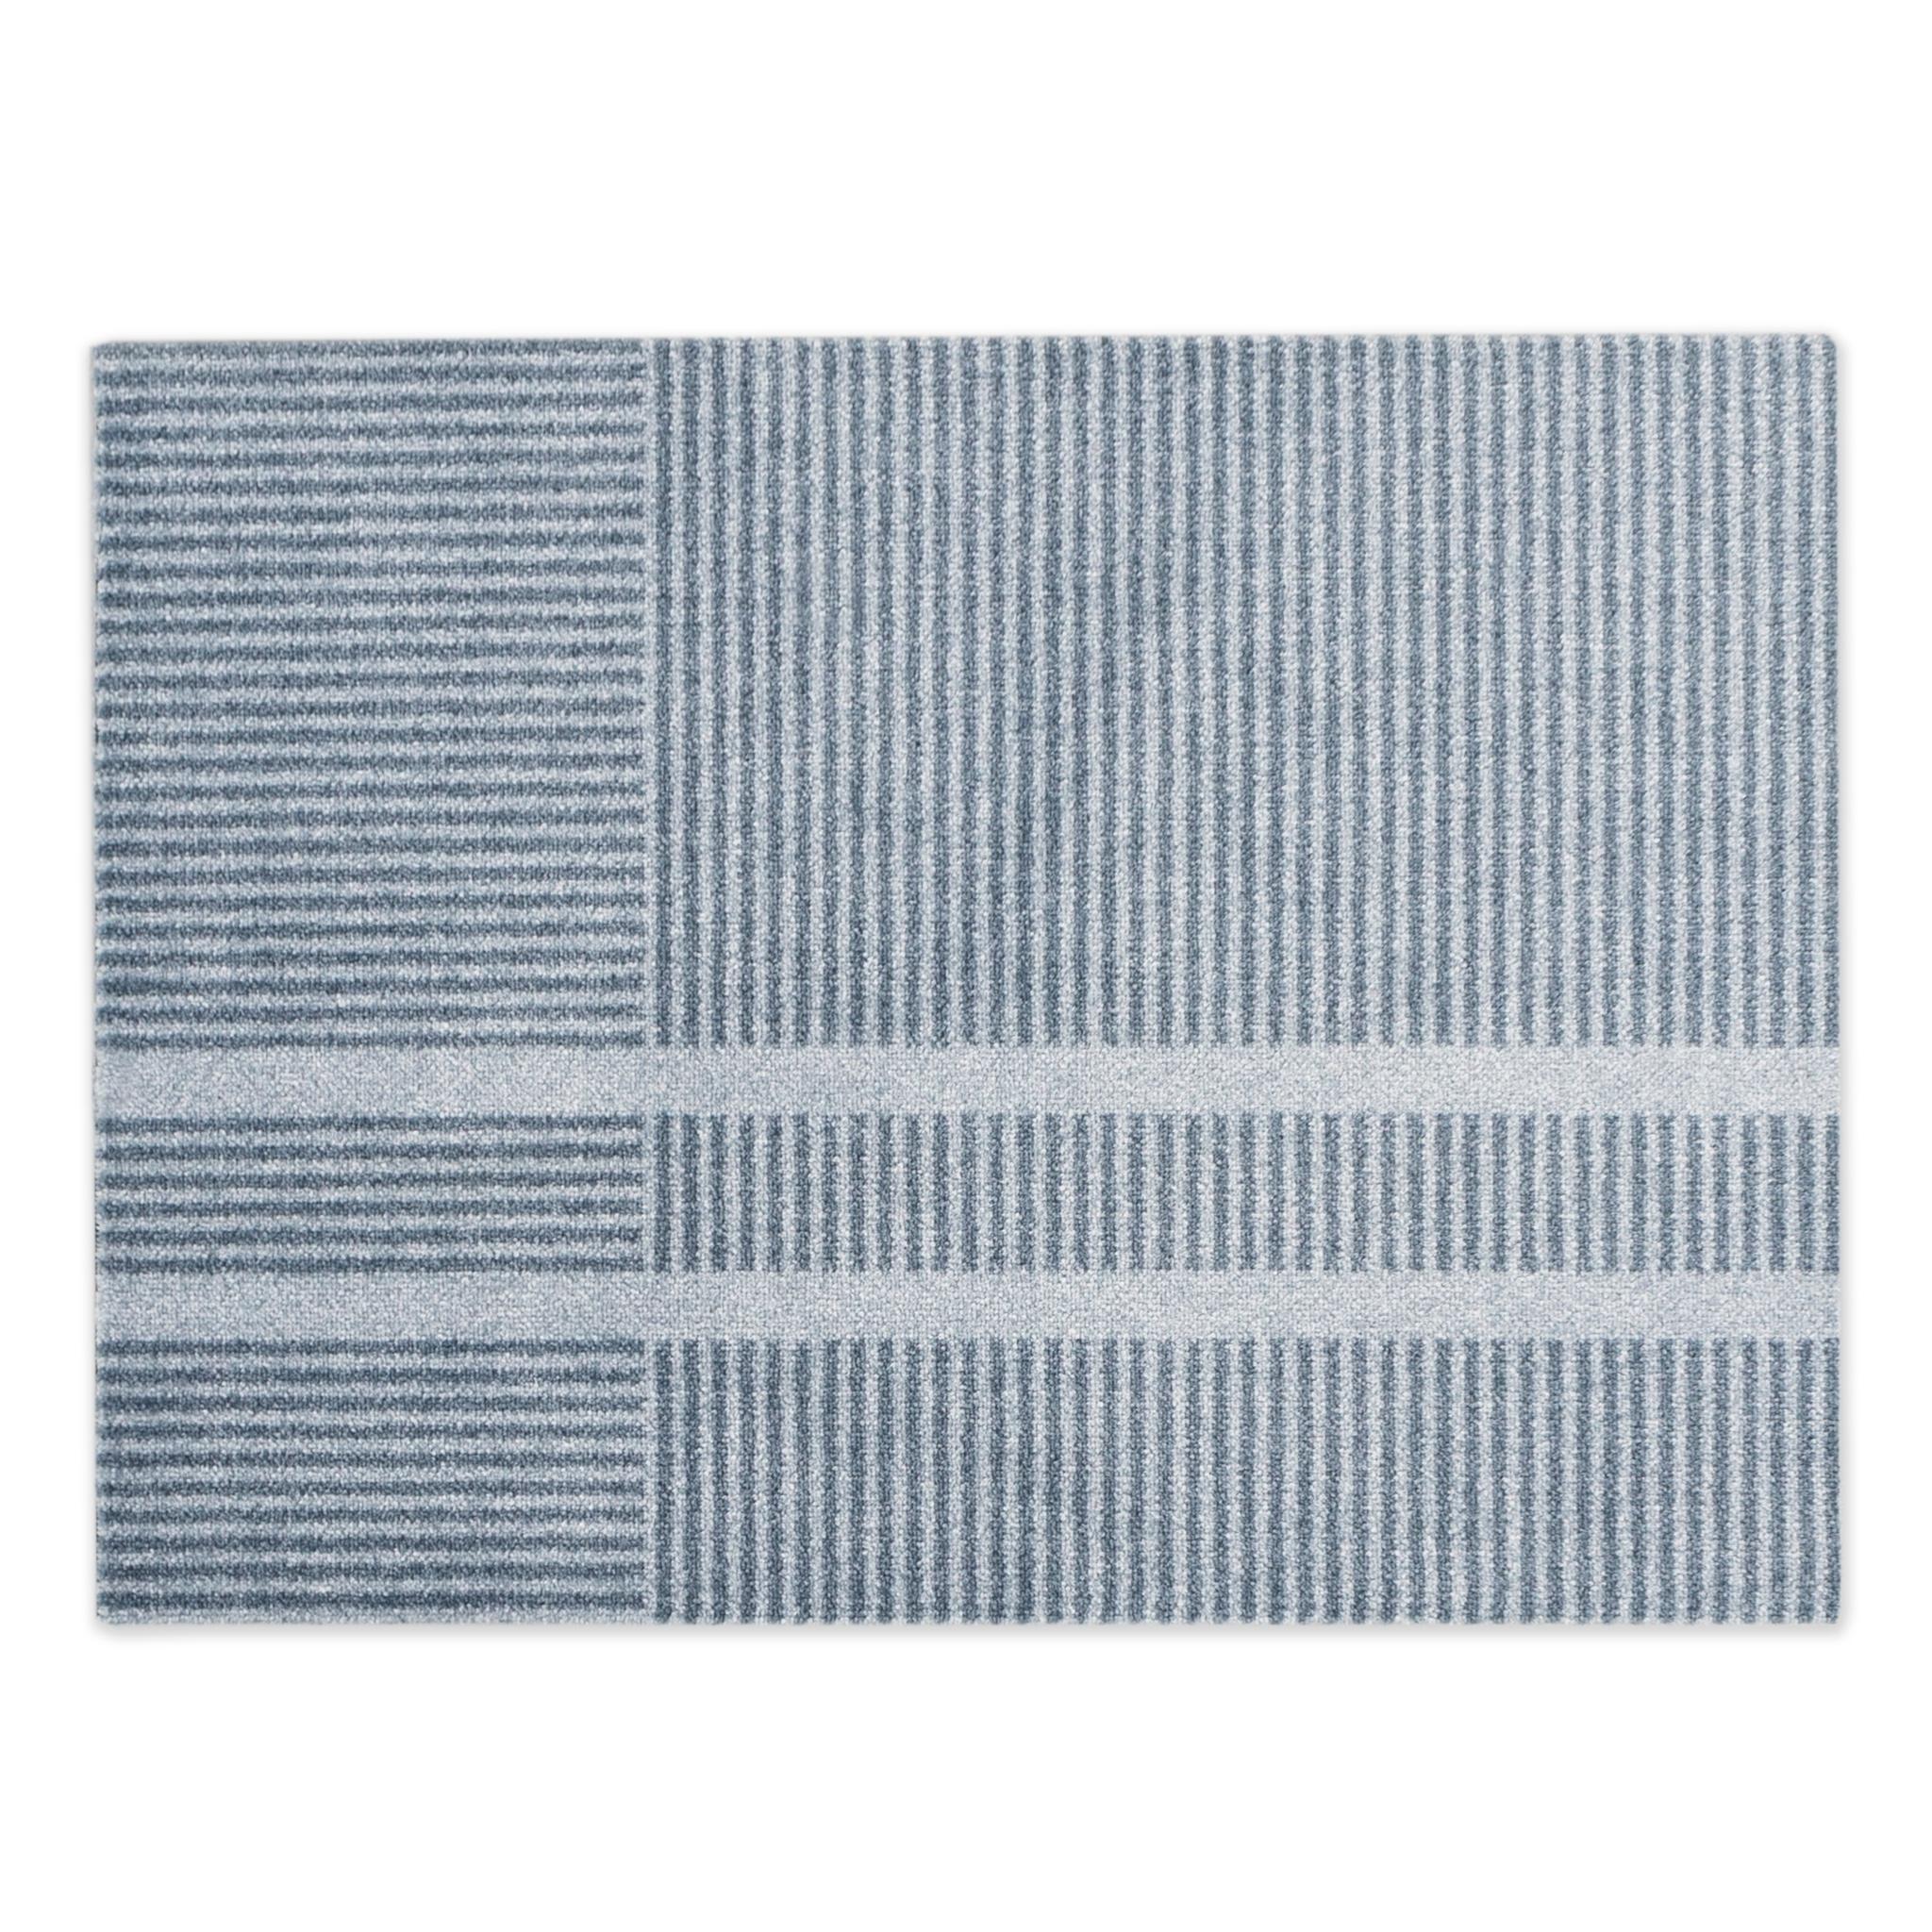 Heymat Doormat Løype overskyet grå, 85x115cm